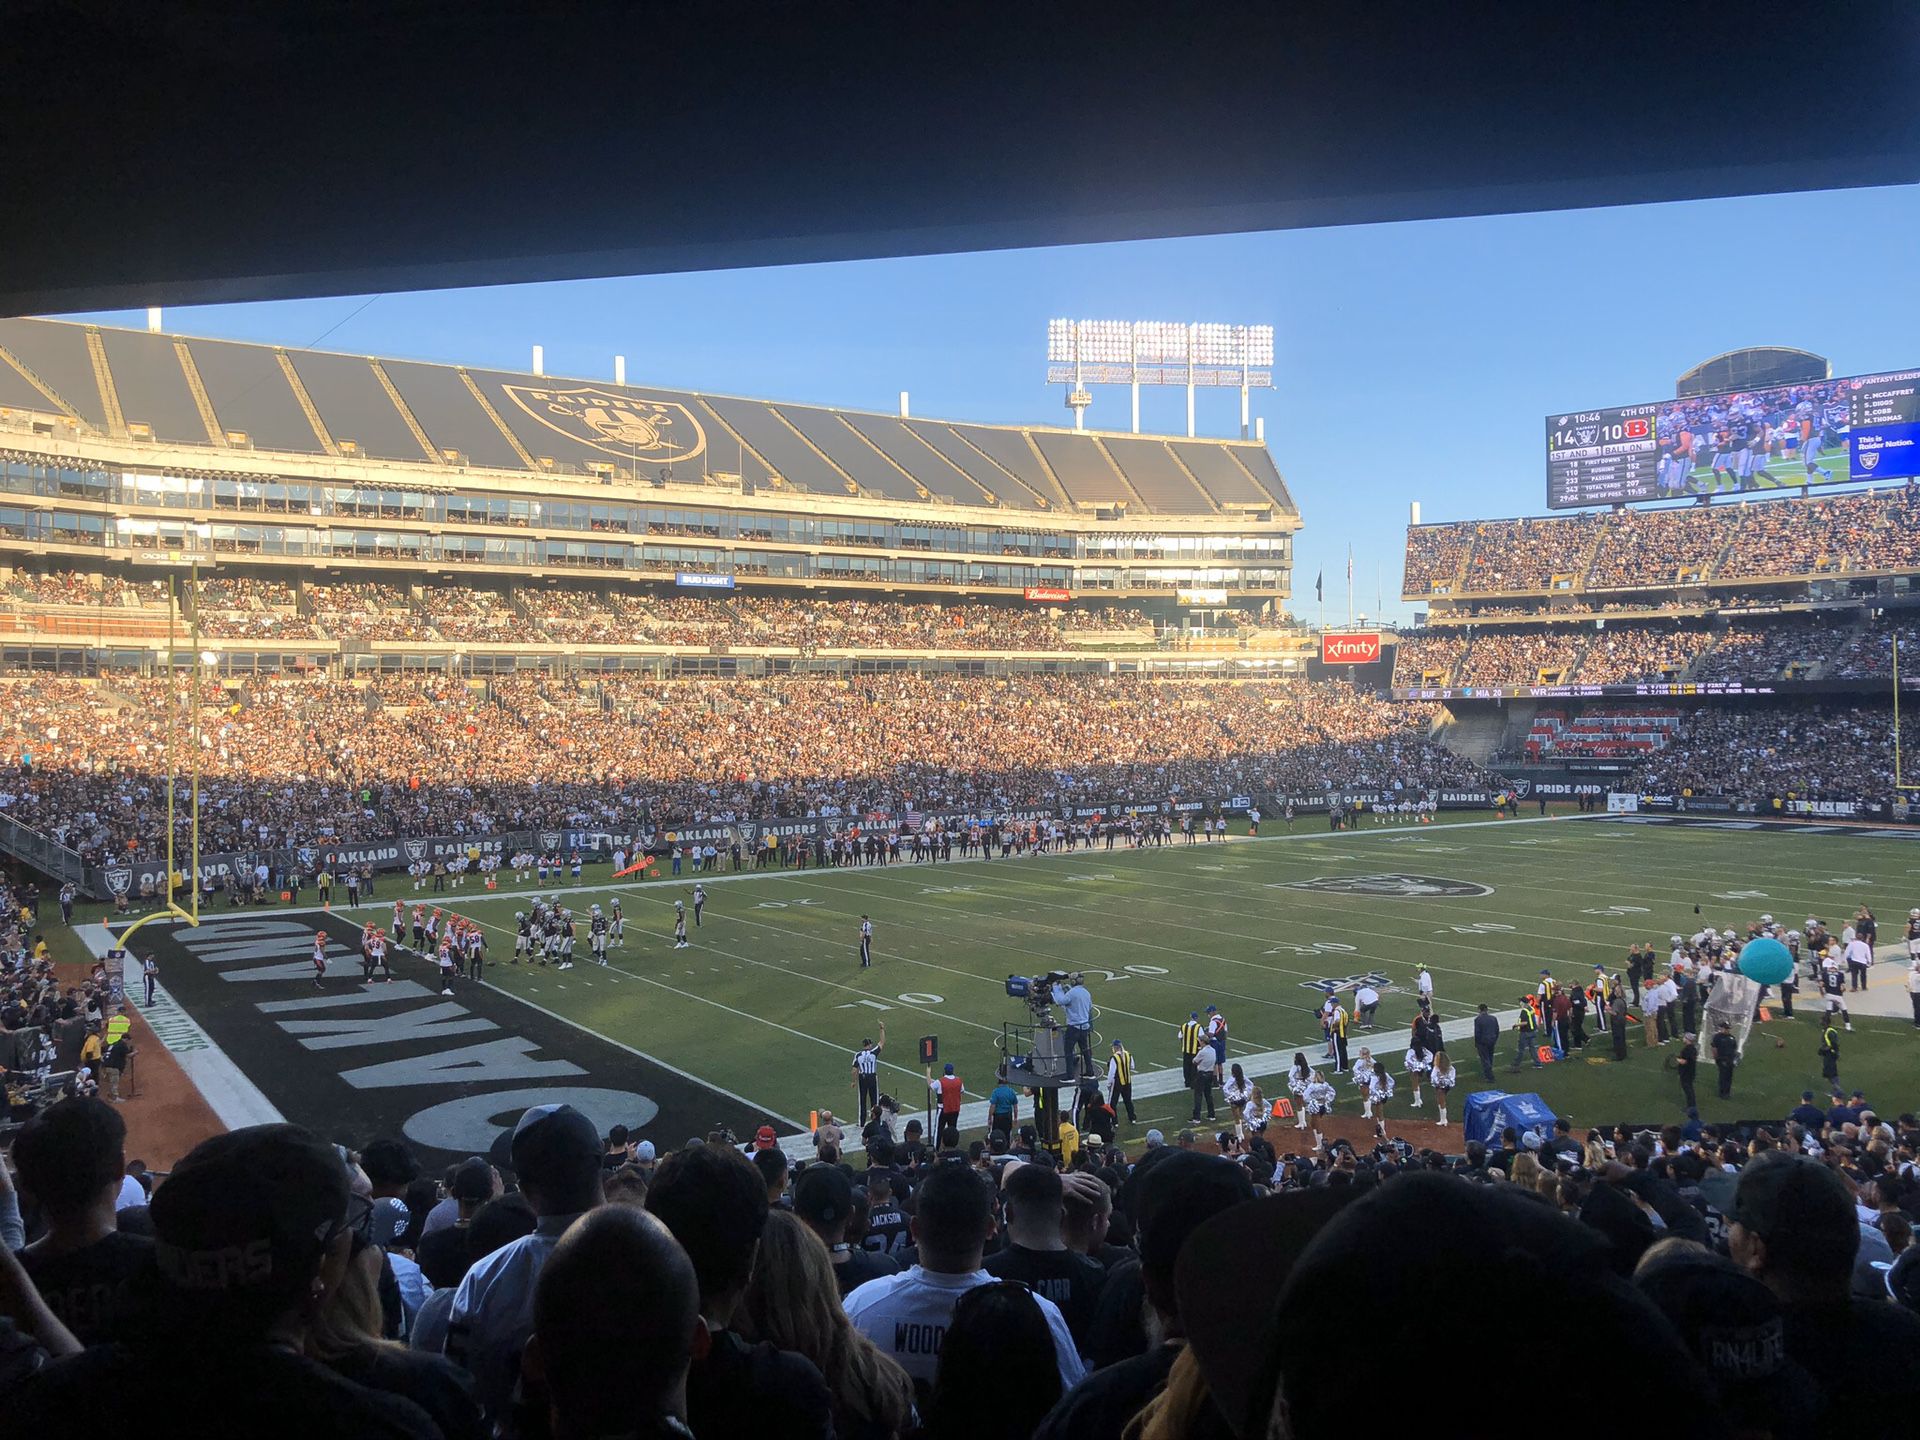 Raiders vs Jags section 123 row 33 seats 9,10,11